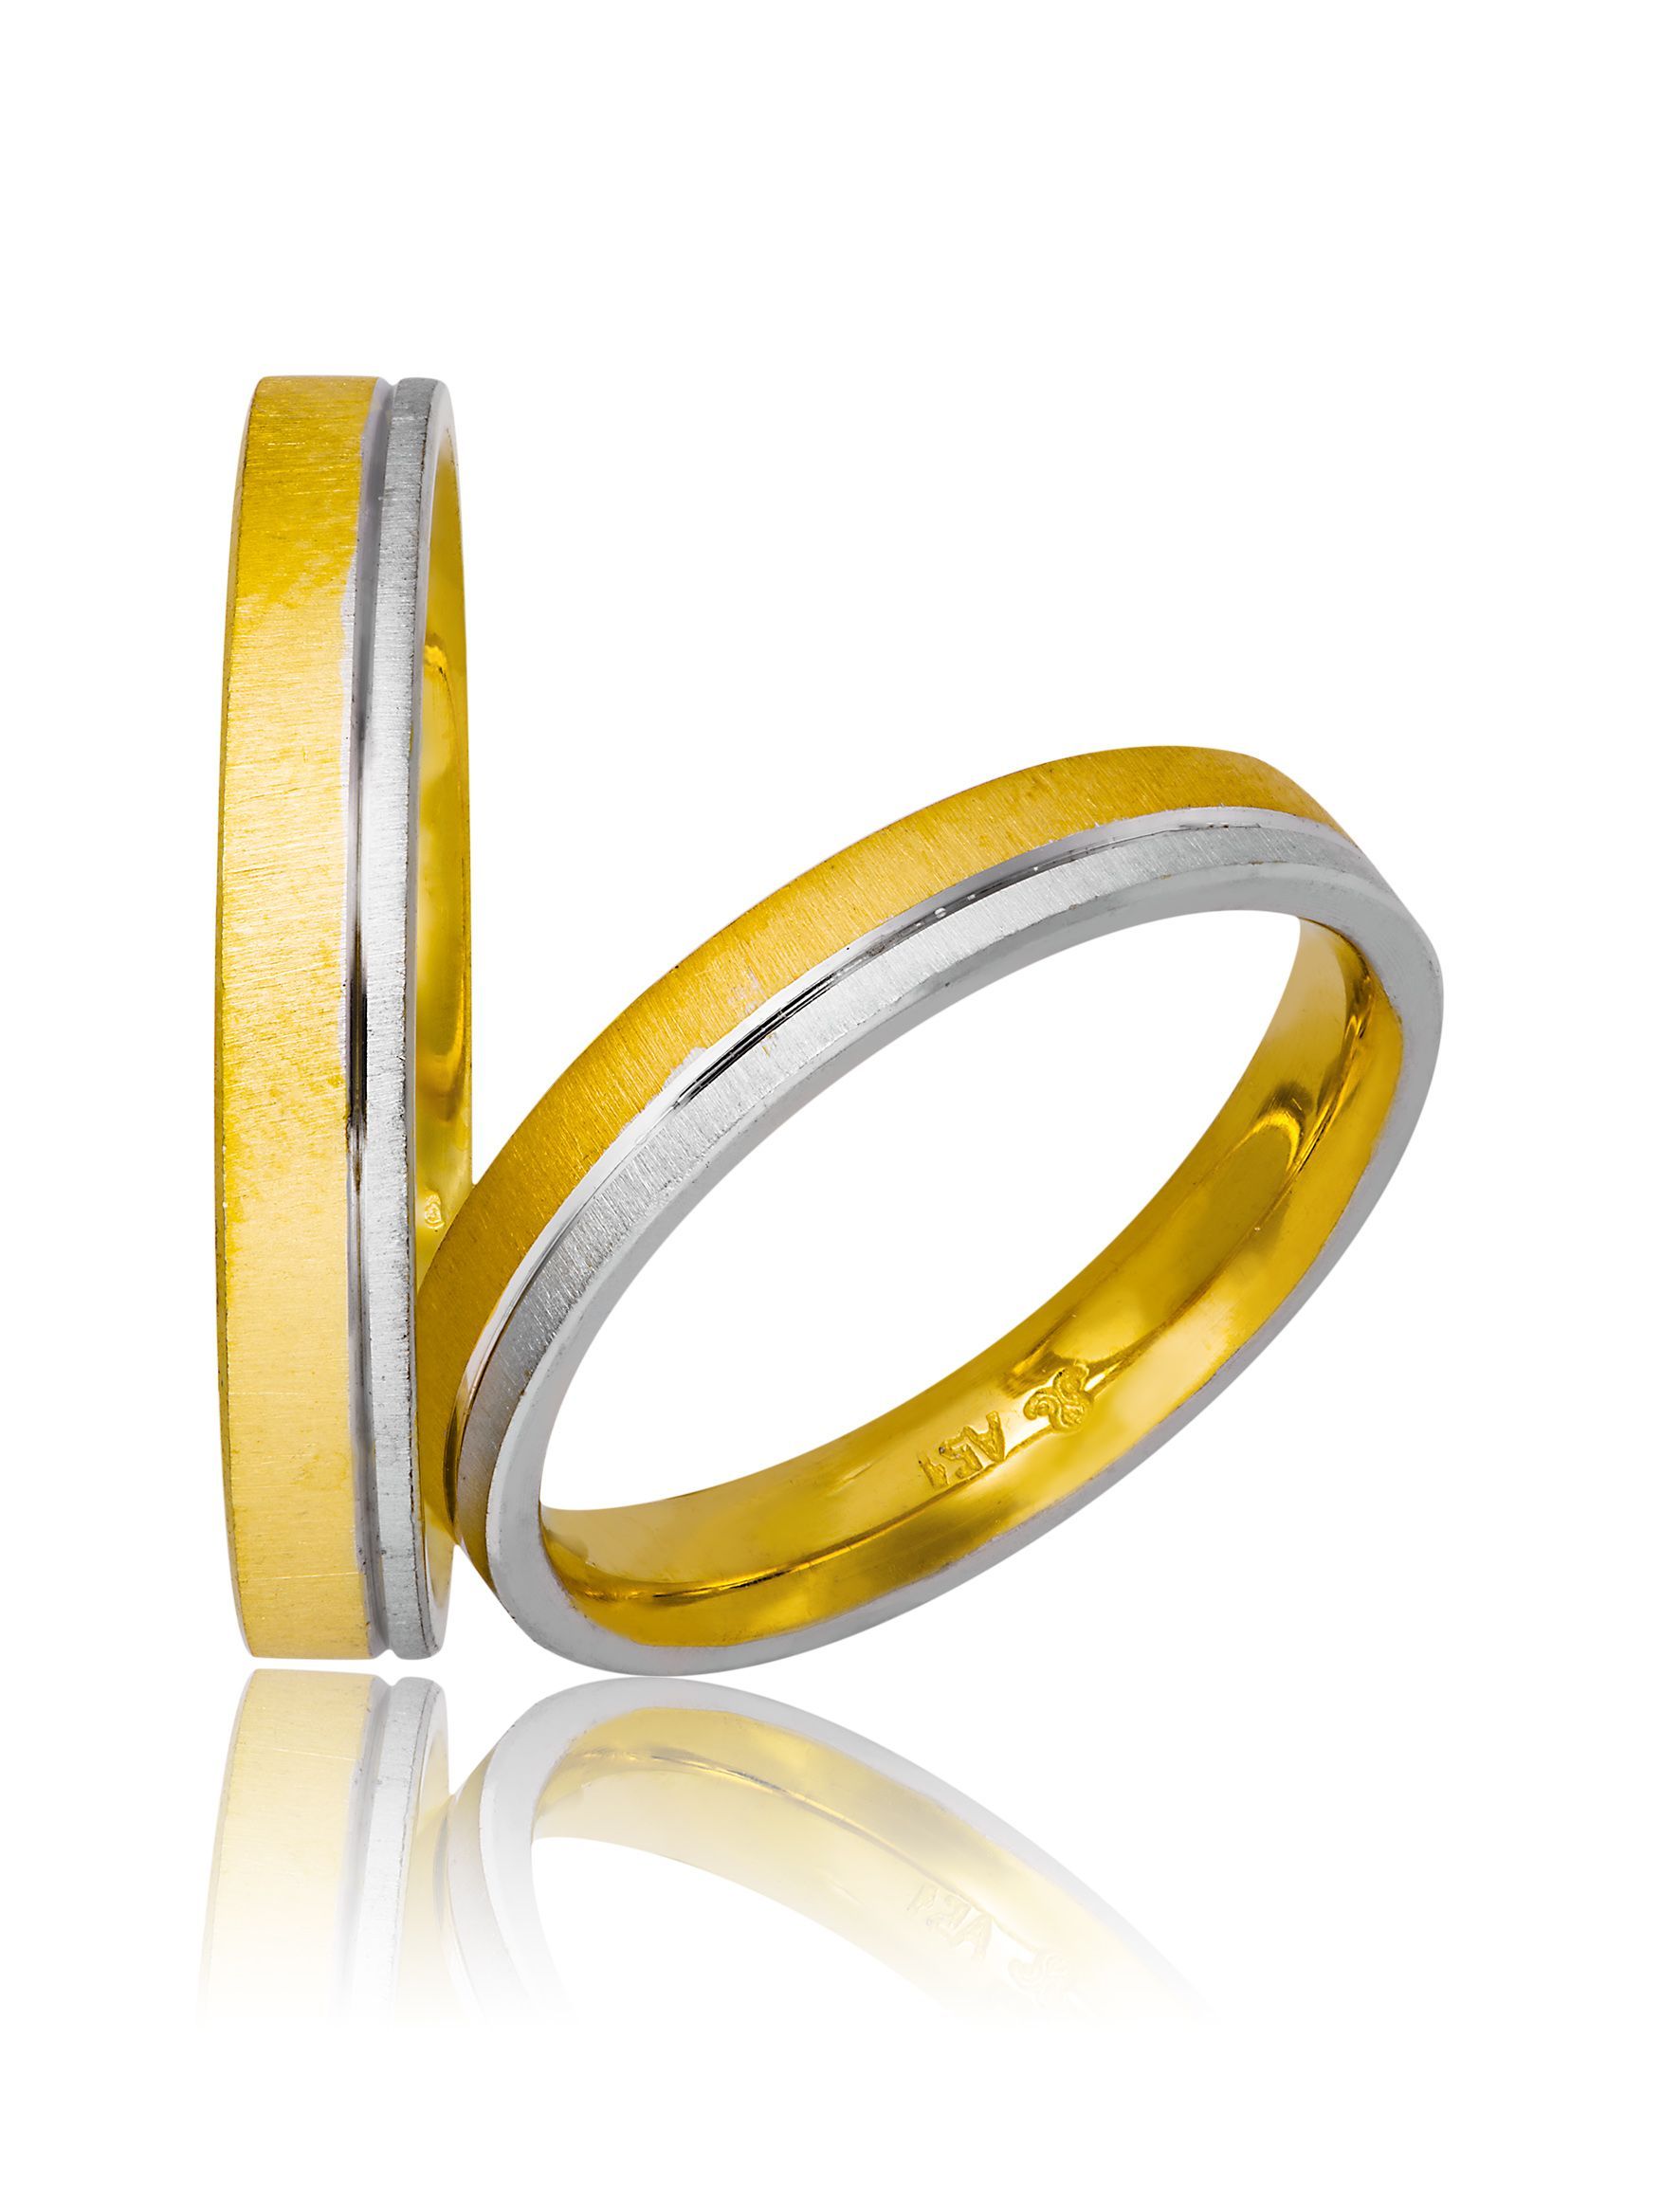 White gold & gold wedding rings 3.5mm (code 707)